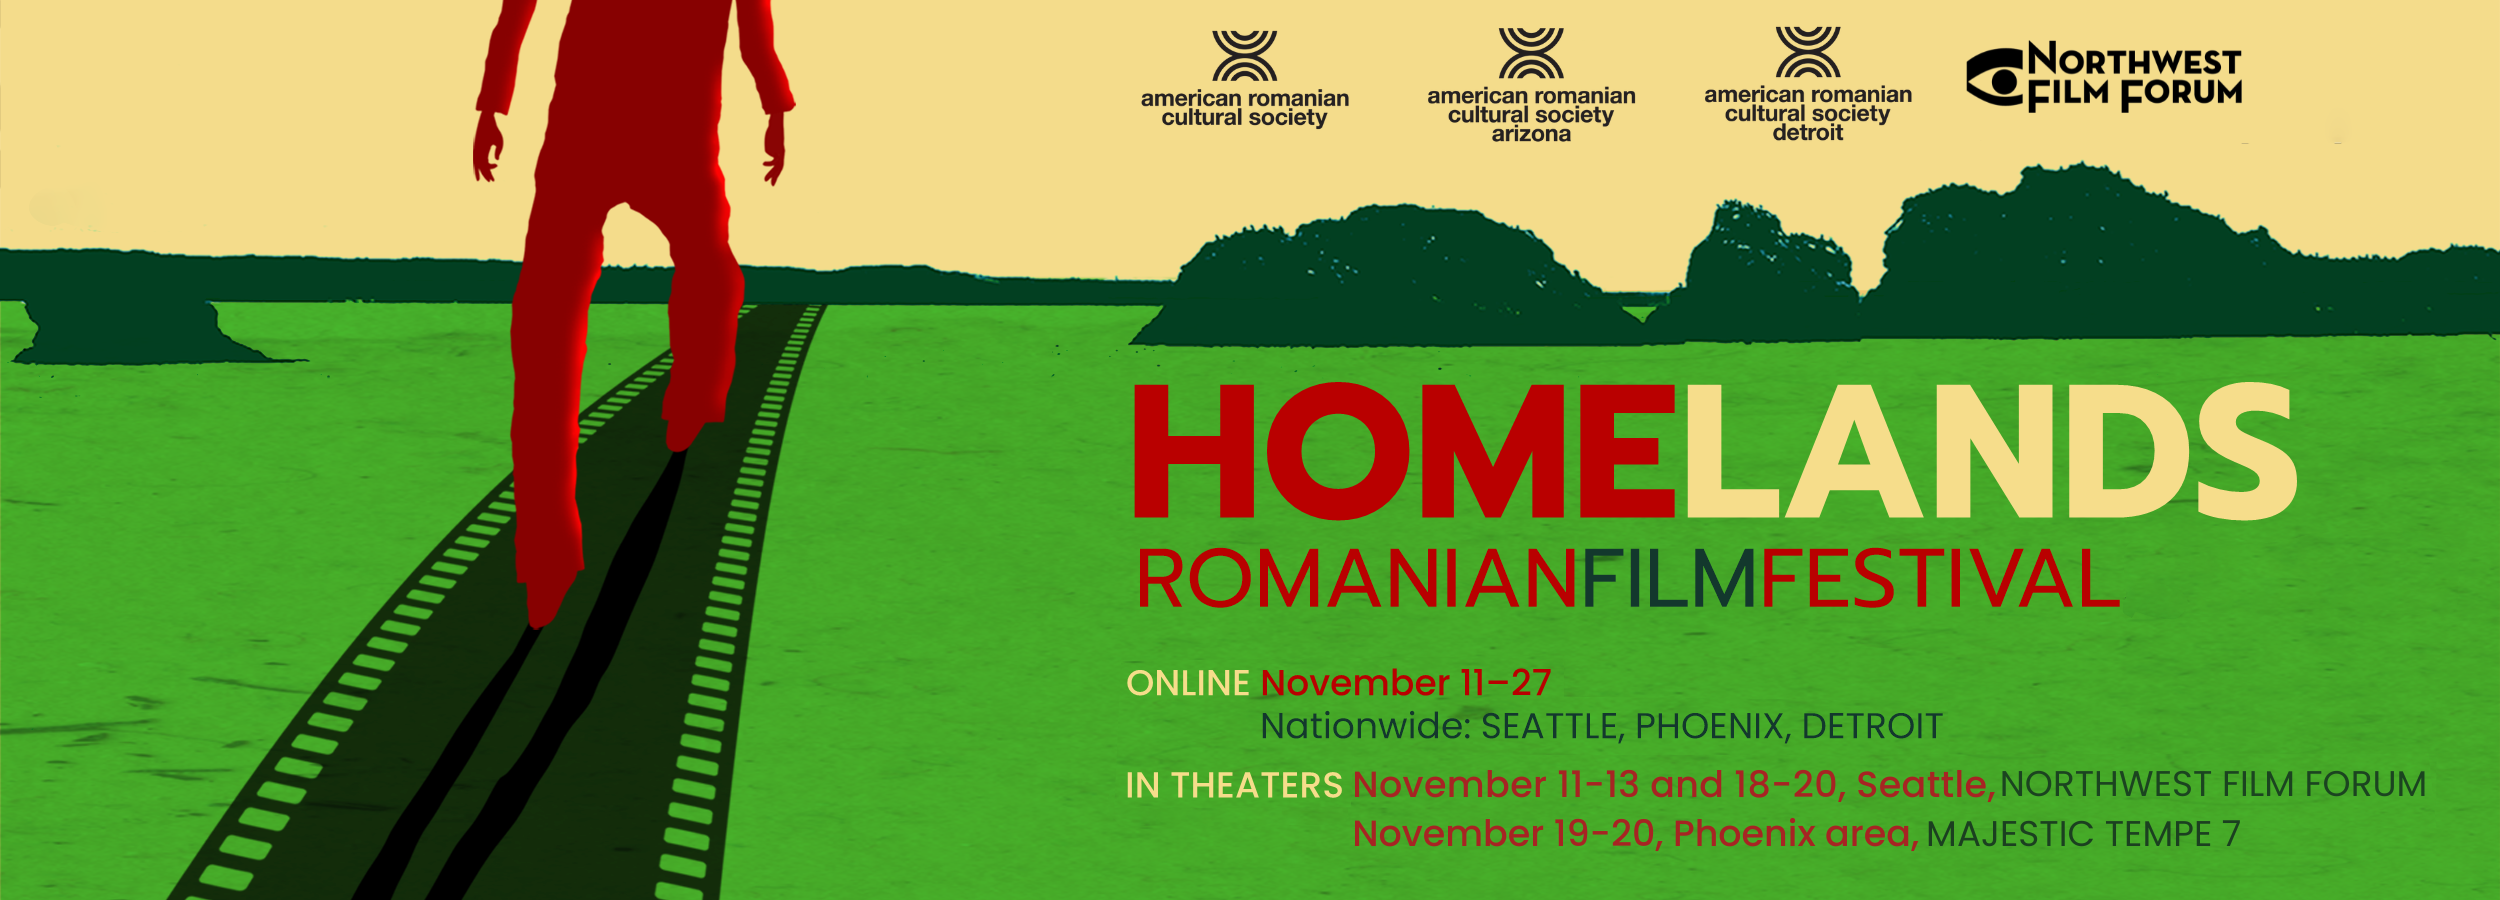 The Romanian Film Festival: HomeLands